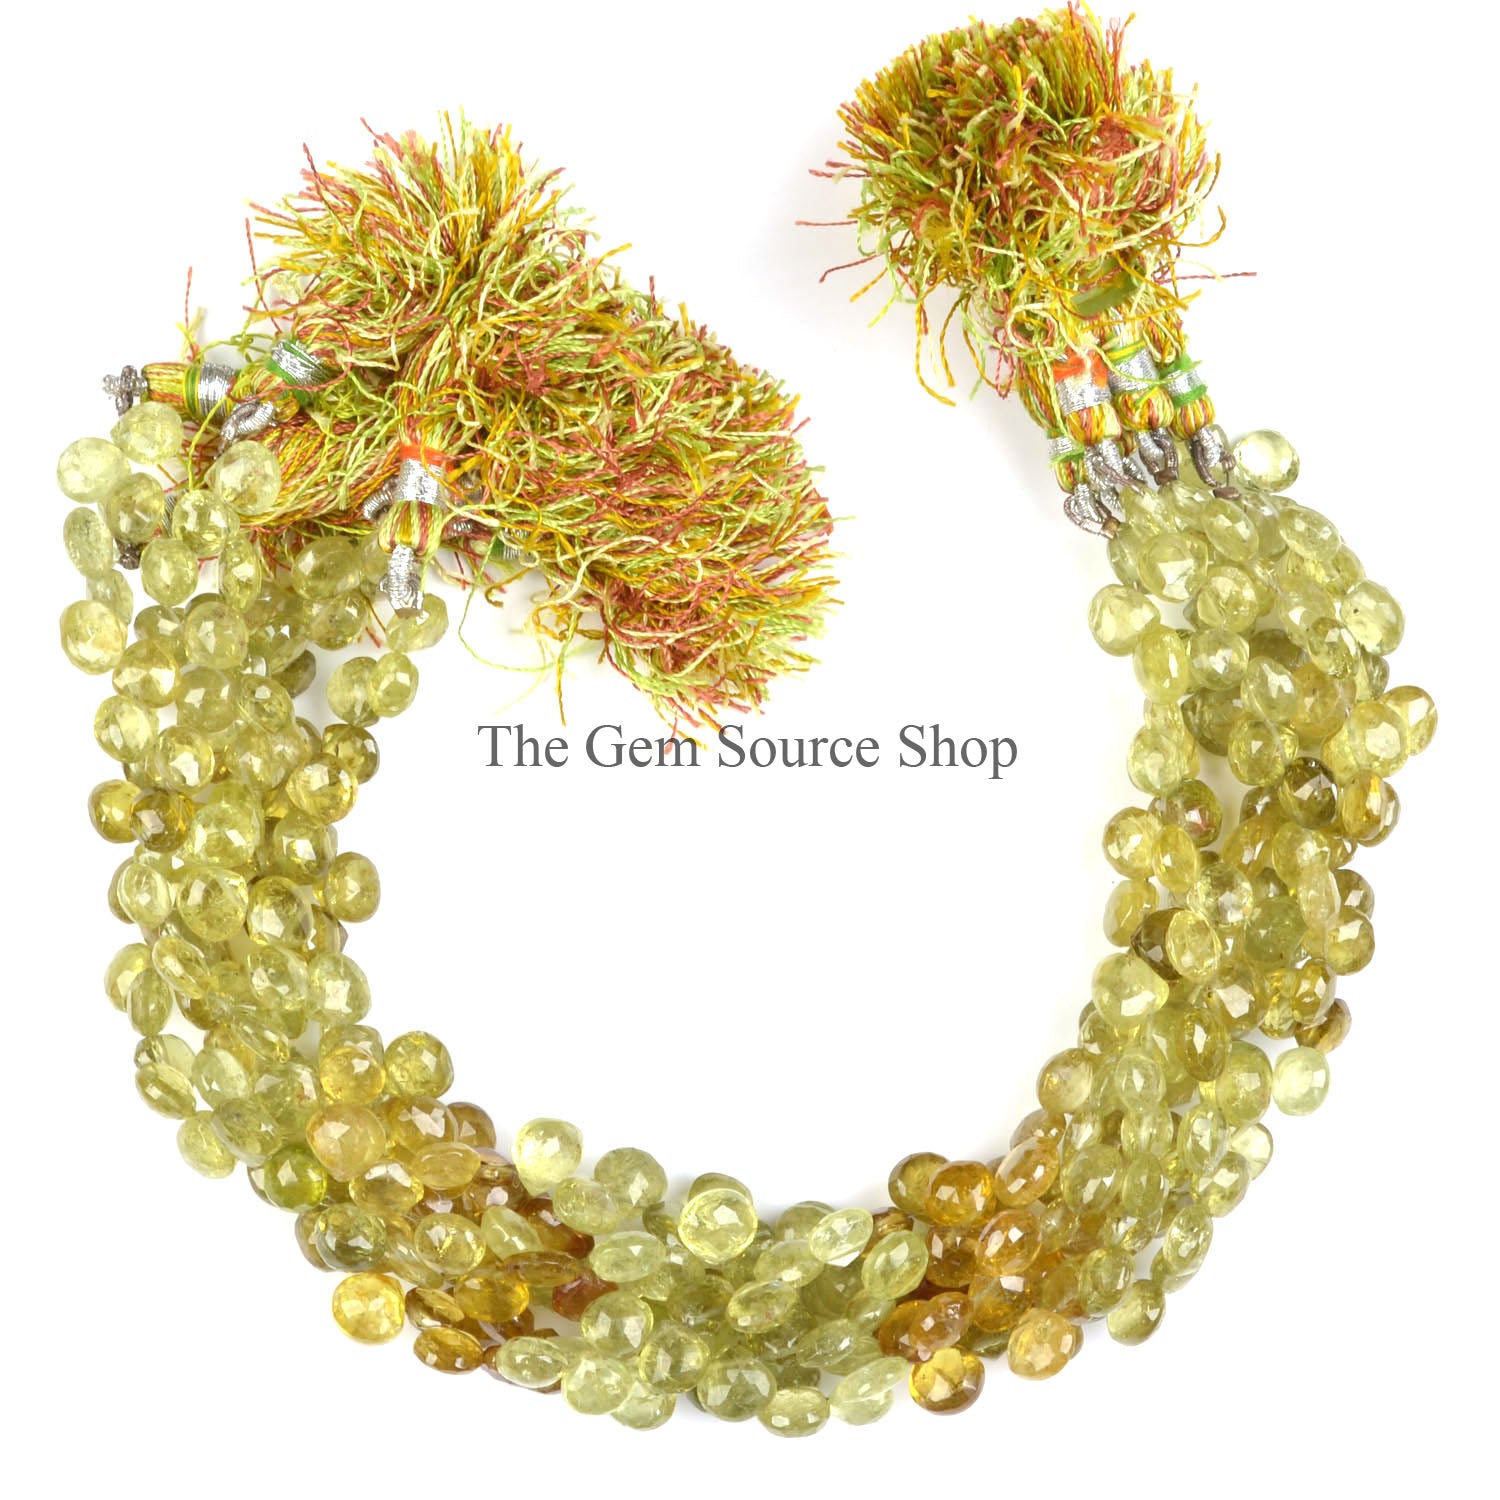 Grossular Garnet Beads, Grossular Garnet Heart Shape Beads, Grossular Garnet Faceted Beads, Grossular Garnet Gemstone Beads